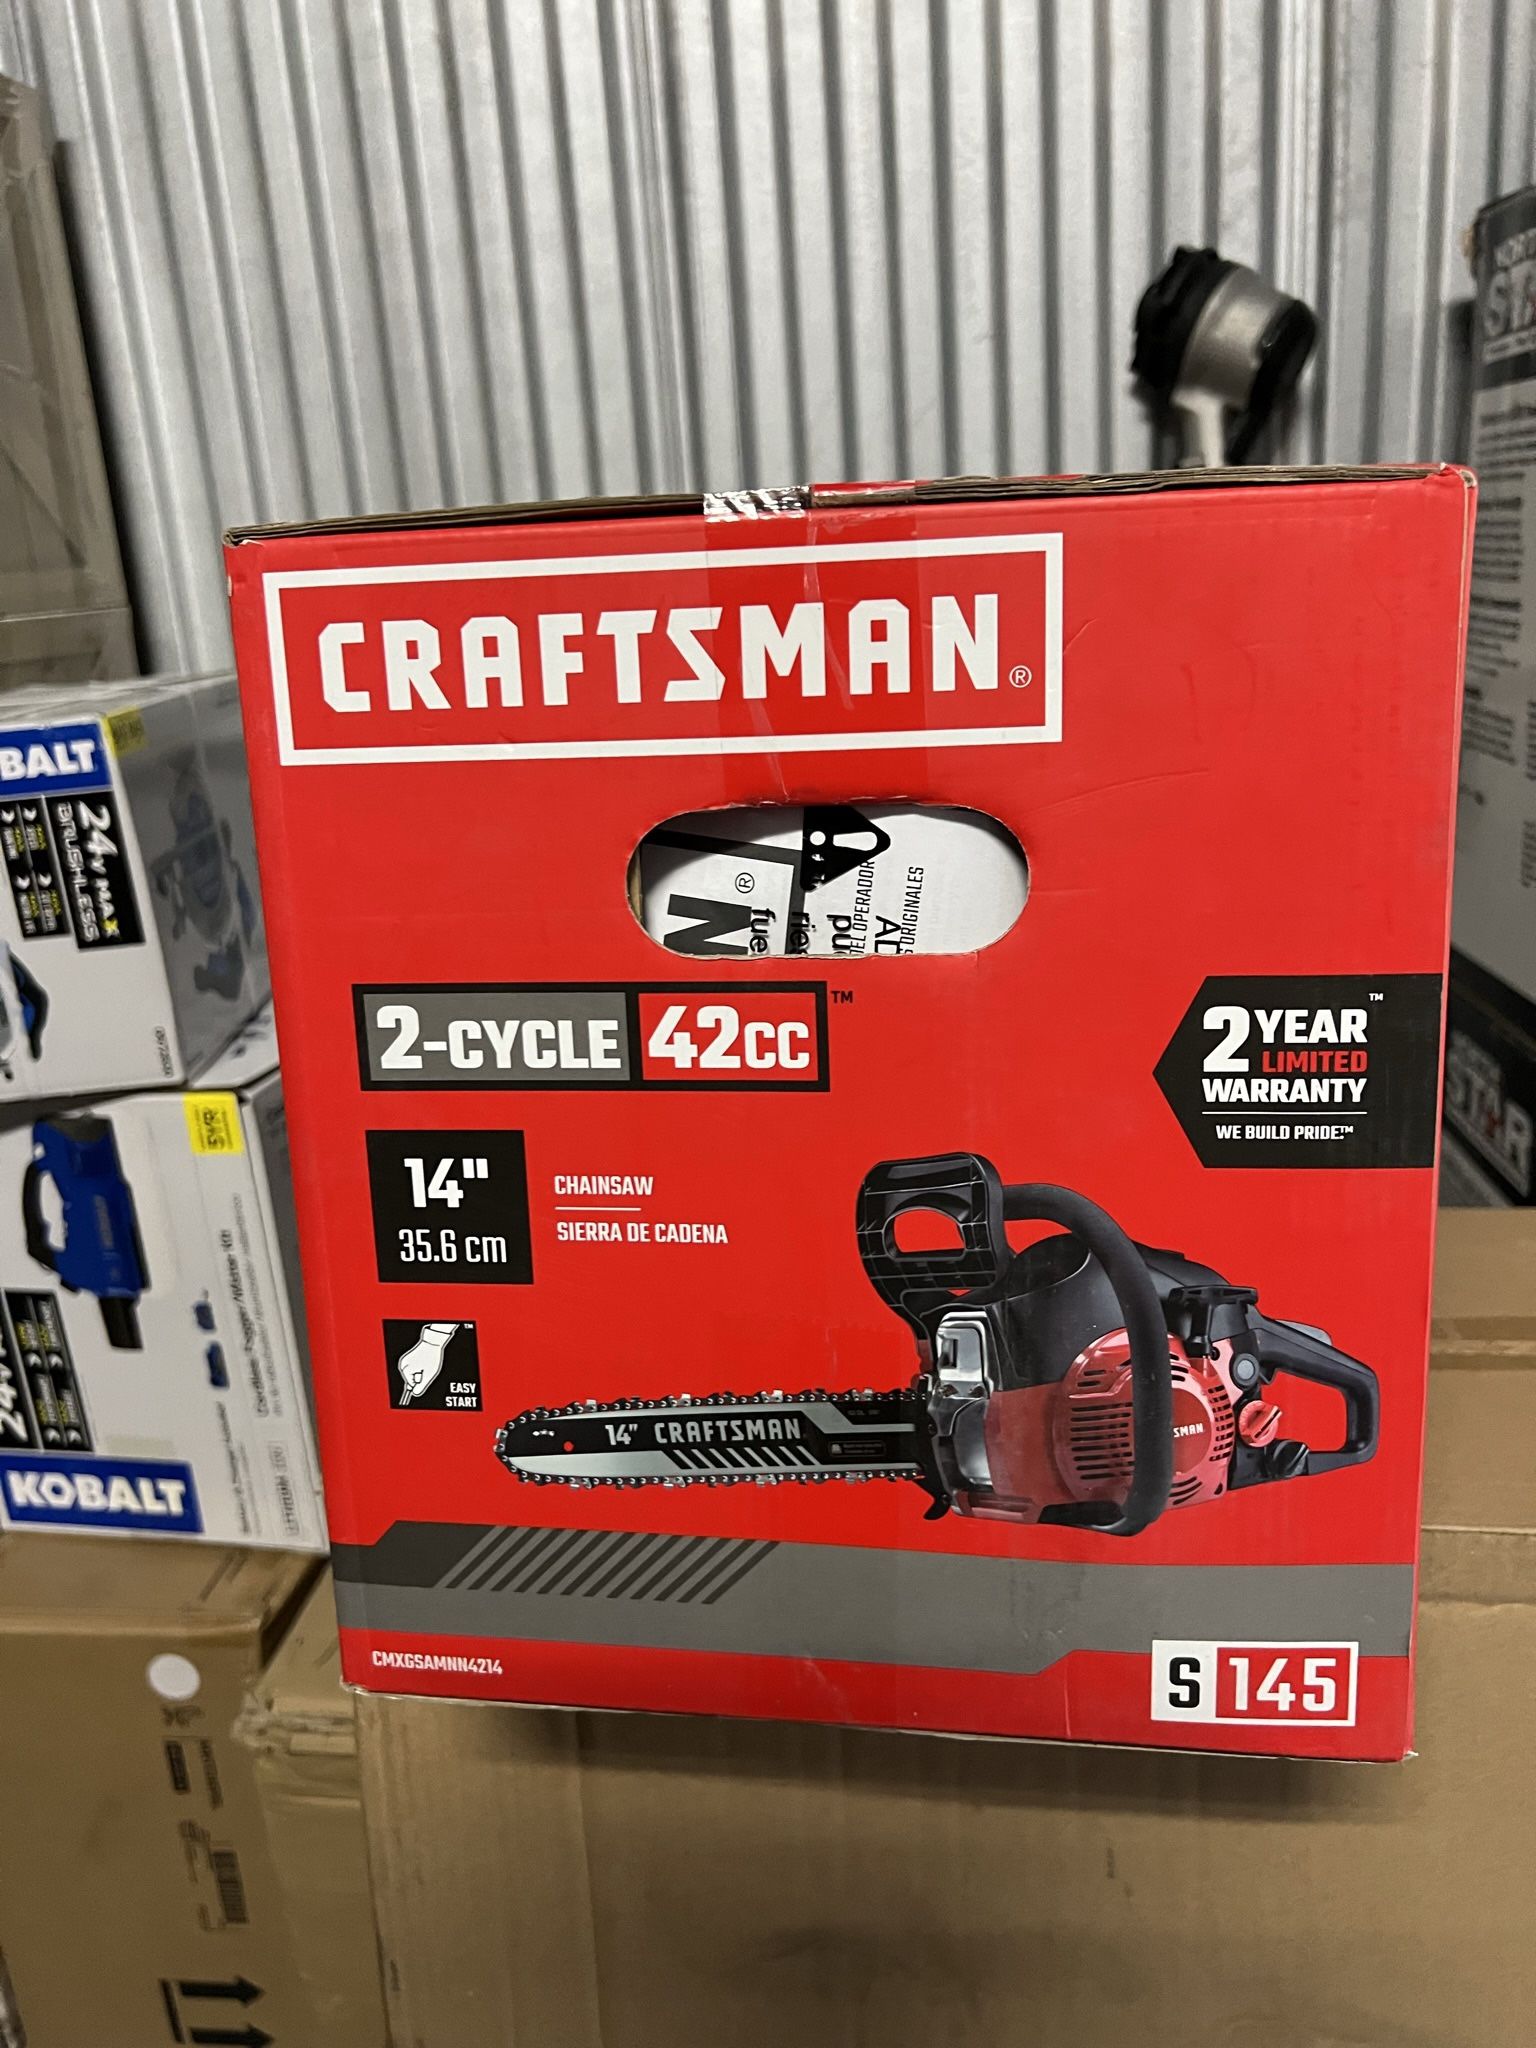 BRAND NEW Craftsman S145 2-Cycle 42cc 14" Chainsaw Model #CMXGSAMNN4214